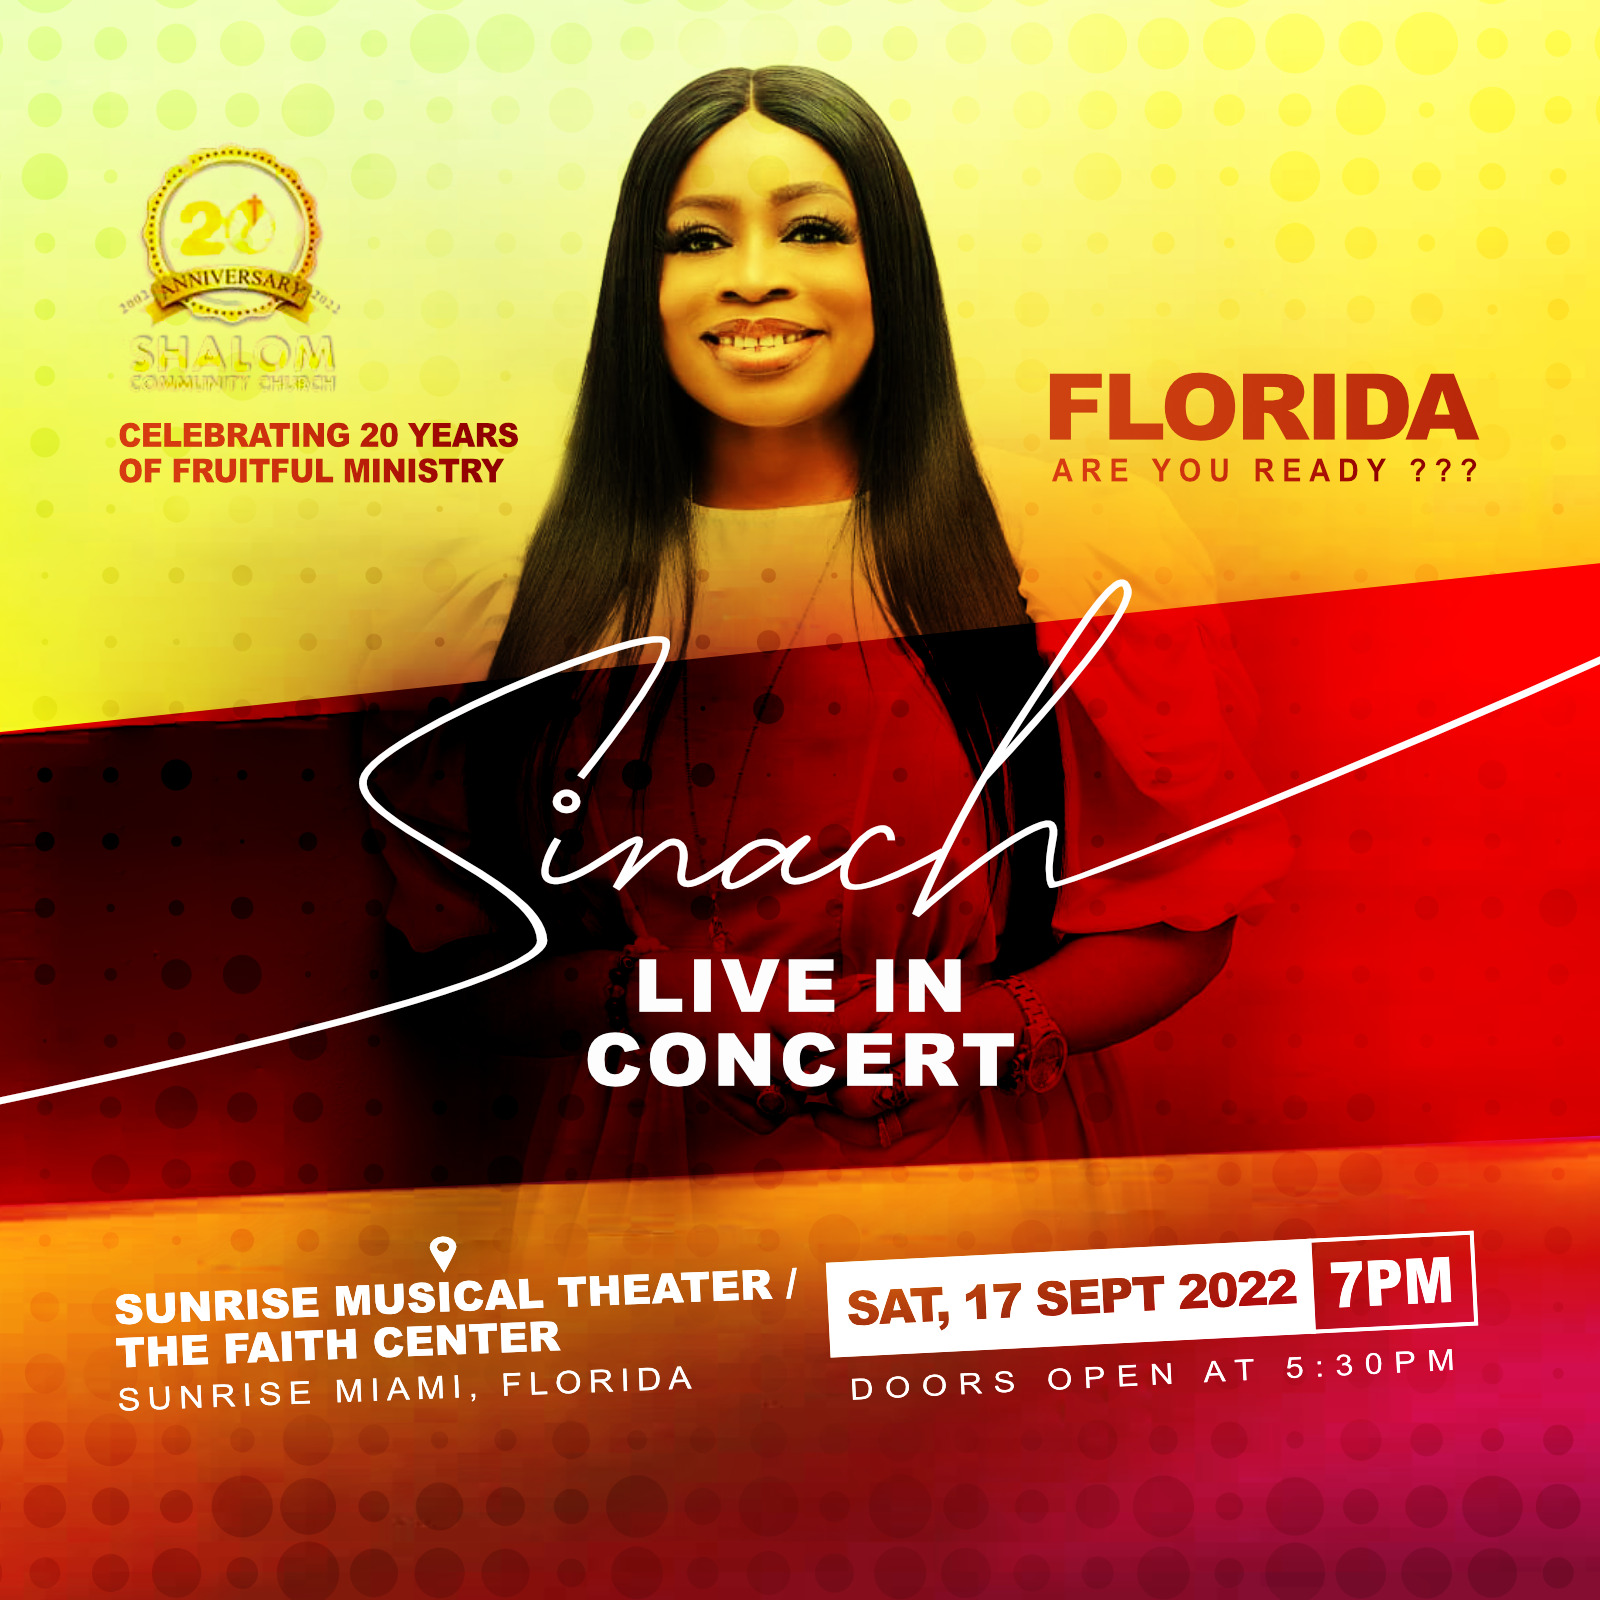 SINACH Live at Sunrise Musical Theater/The Faith Center, SUNRISE MIAMI, Florida